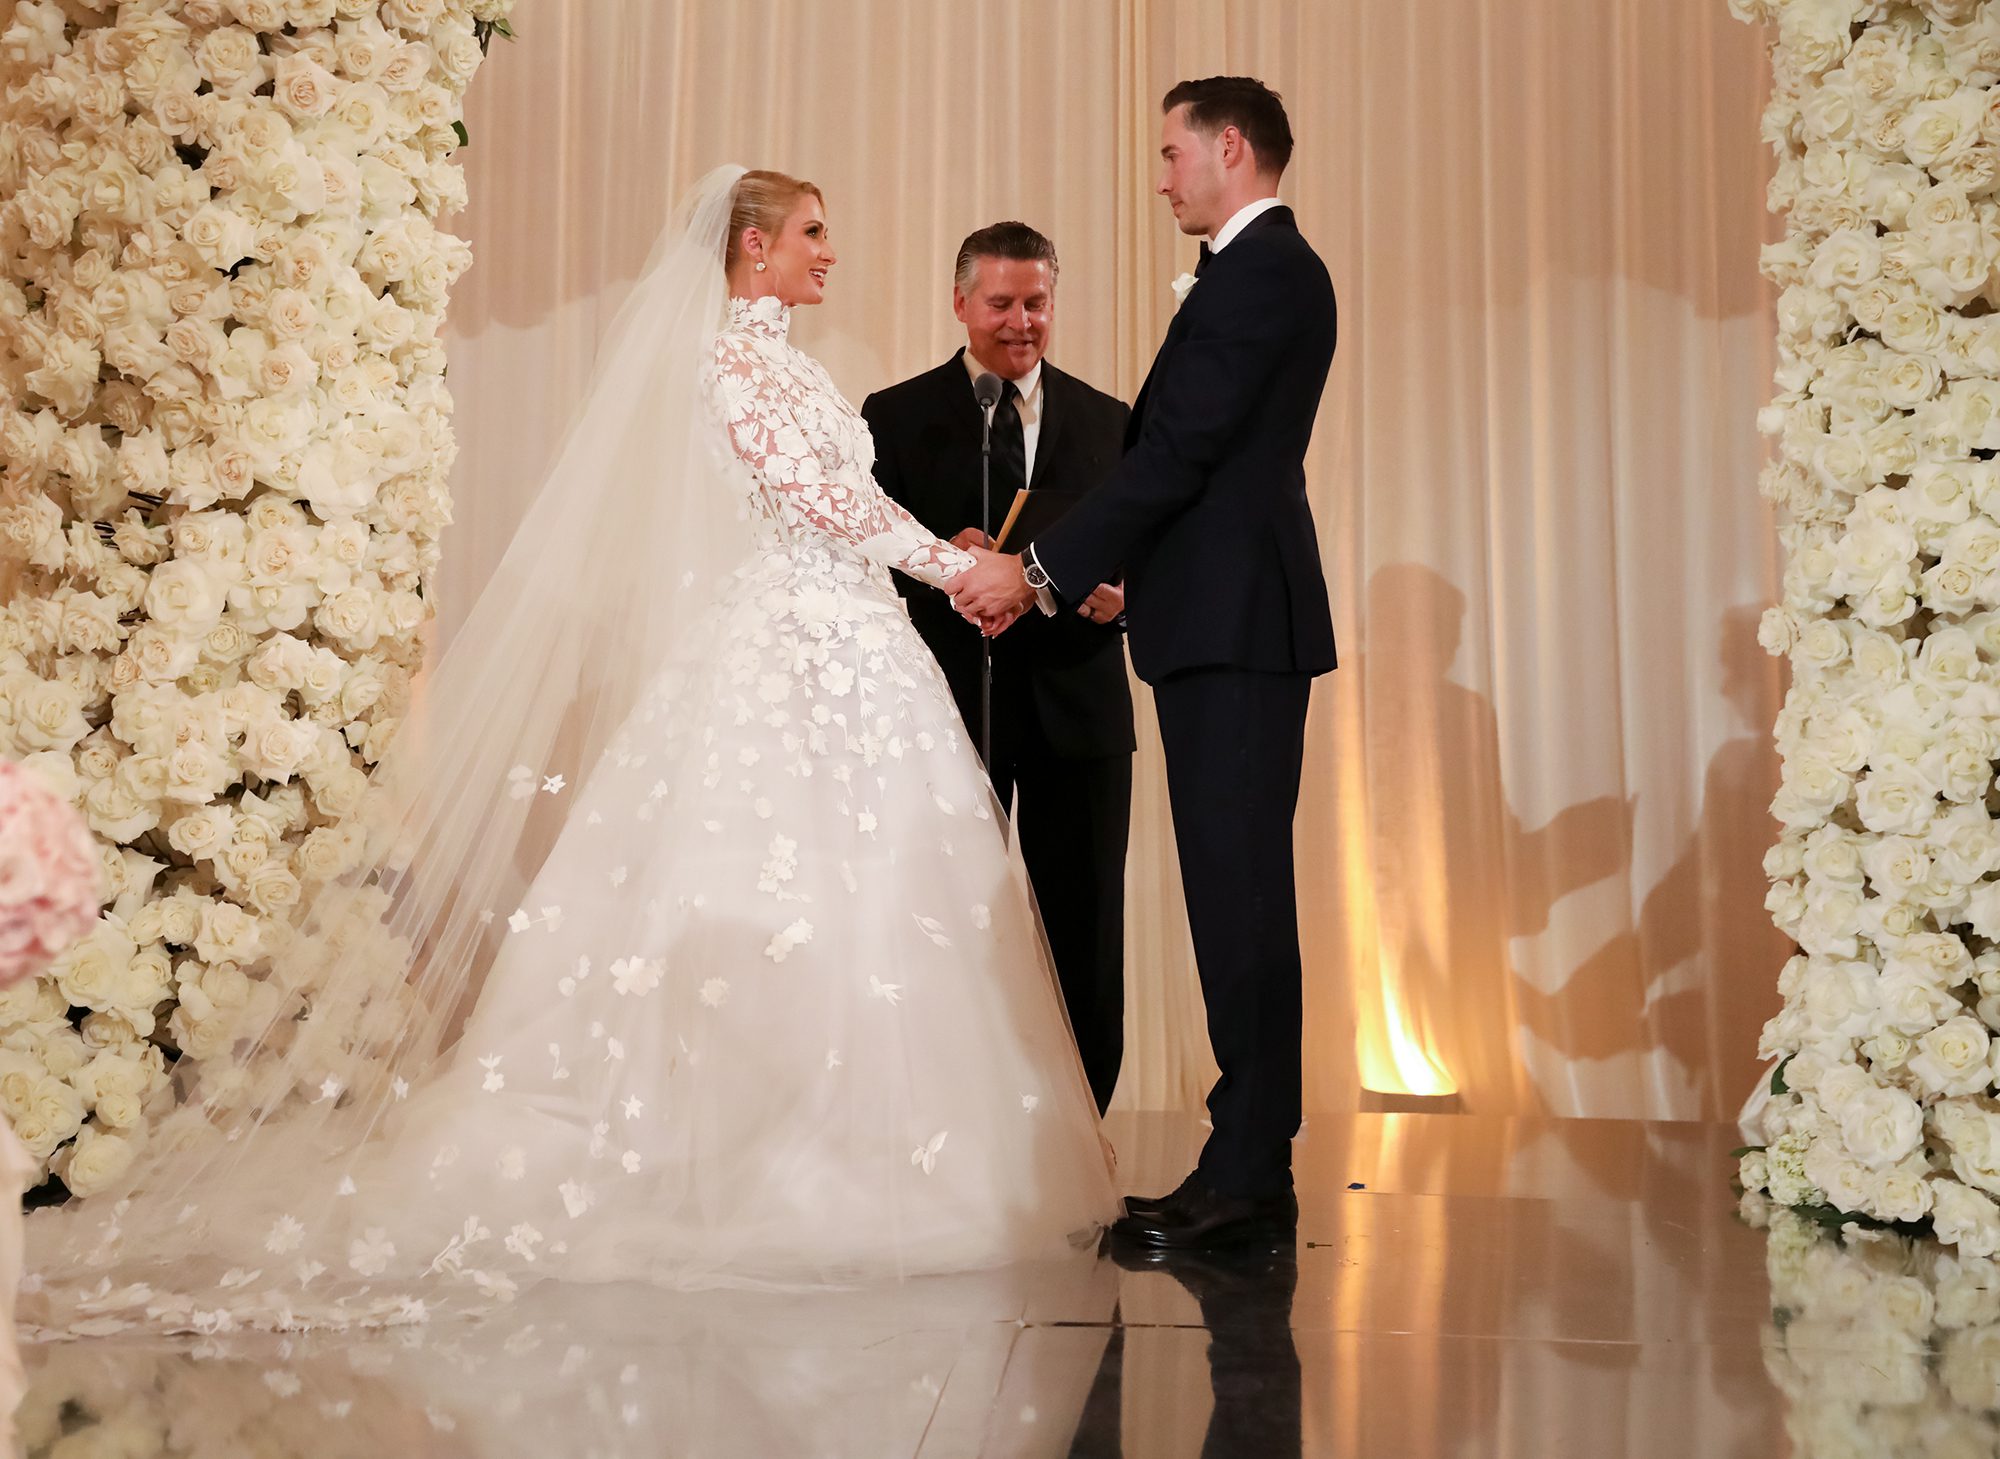 The wedding of Paris Hilton and Carter Reum,